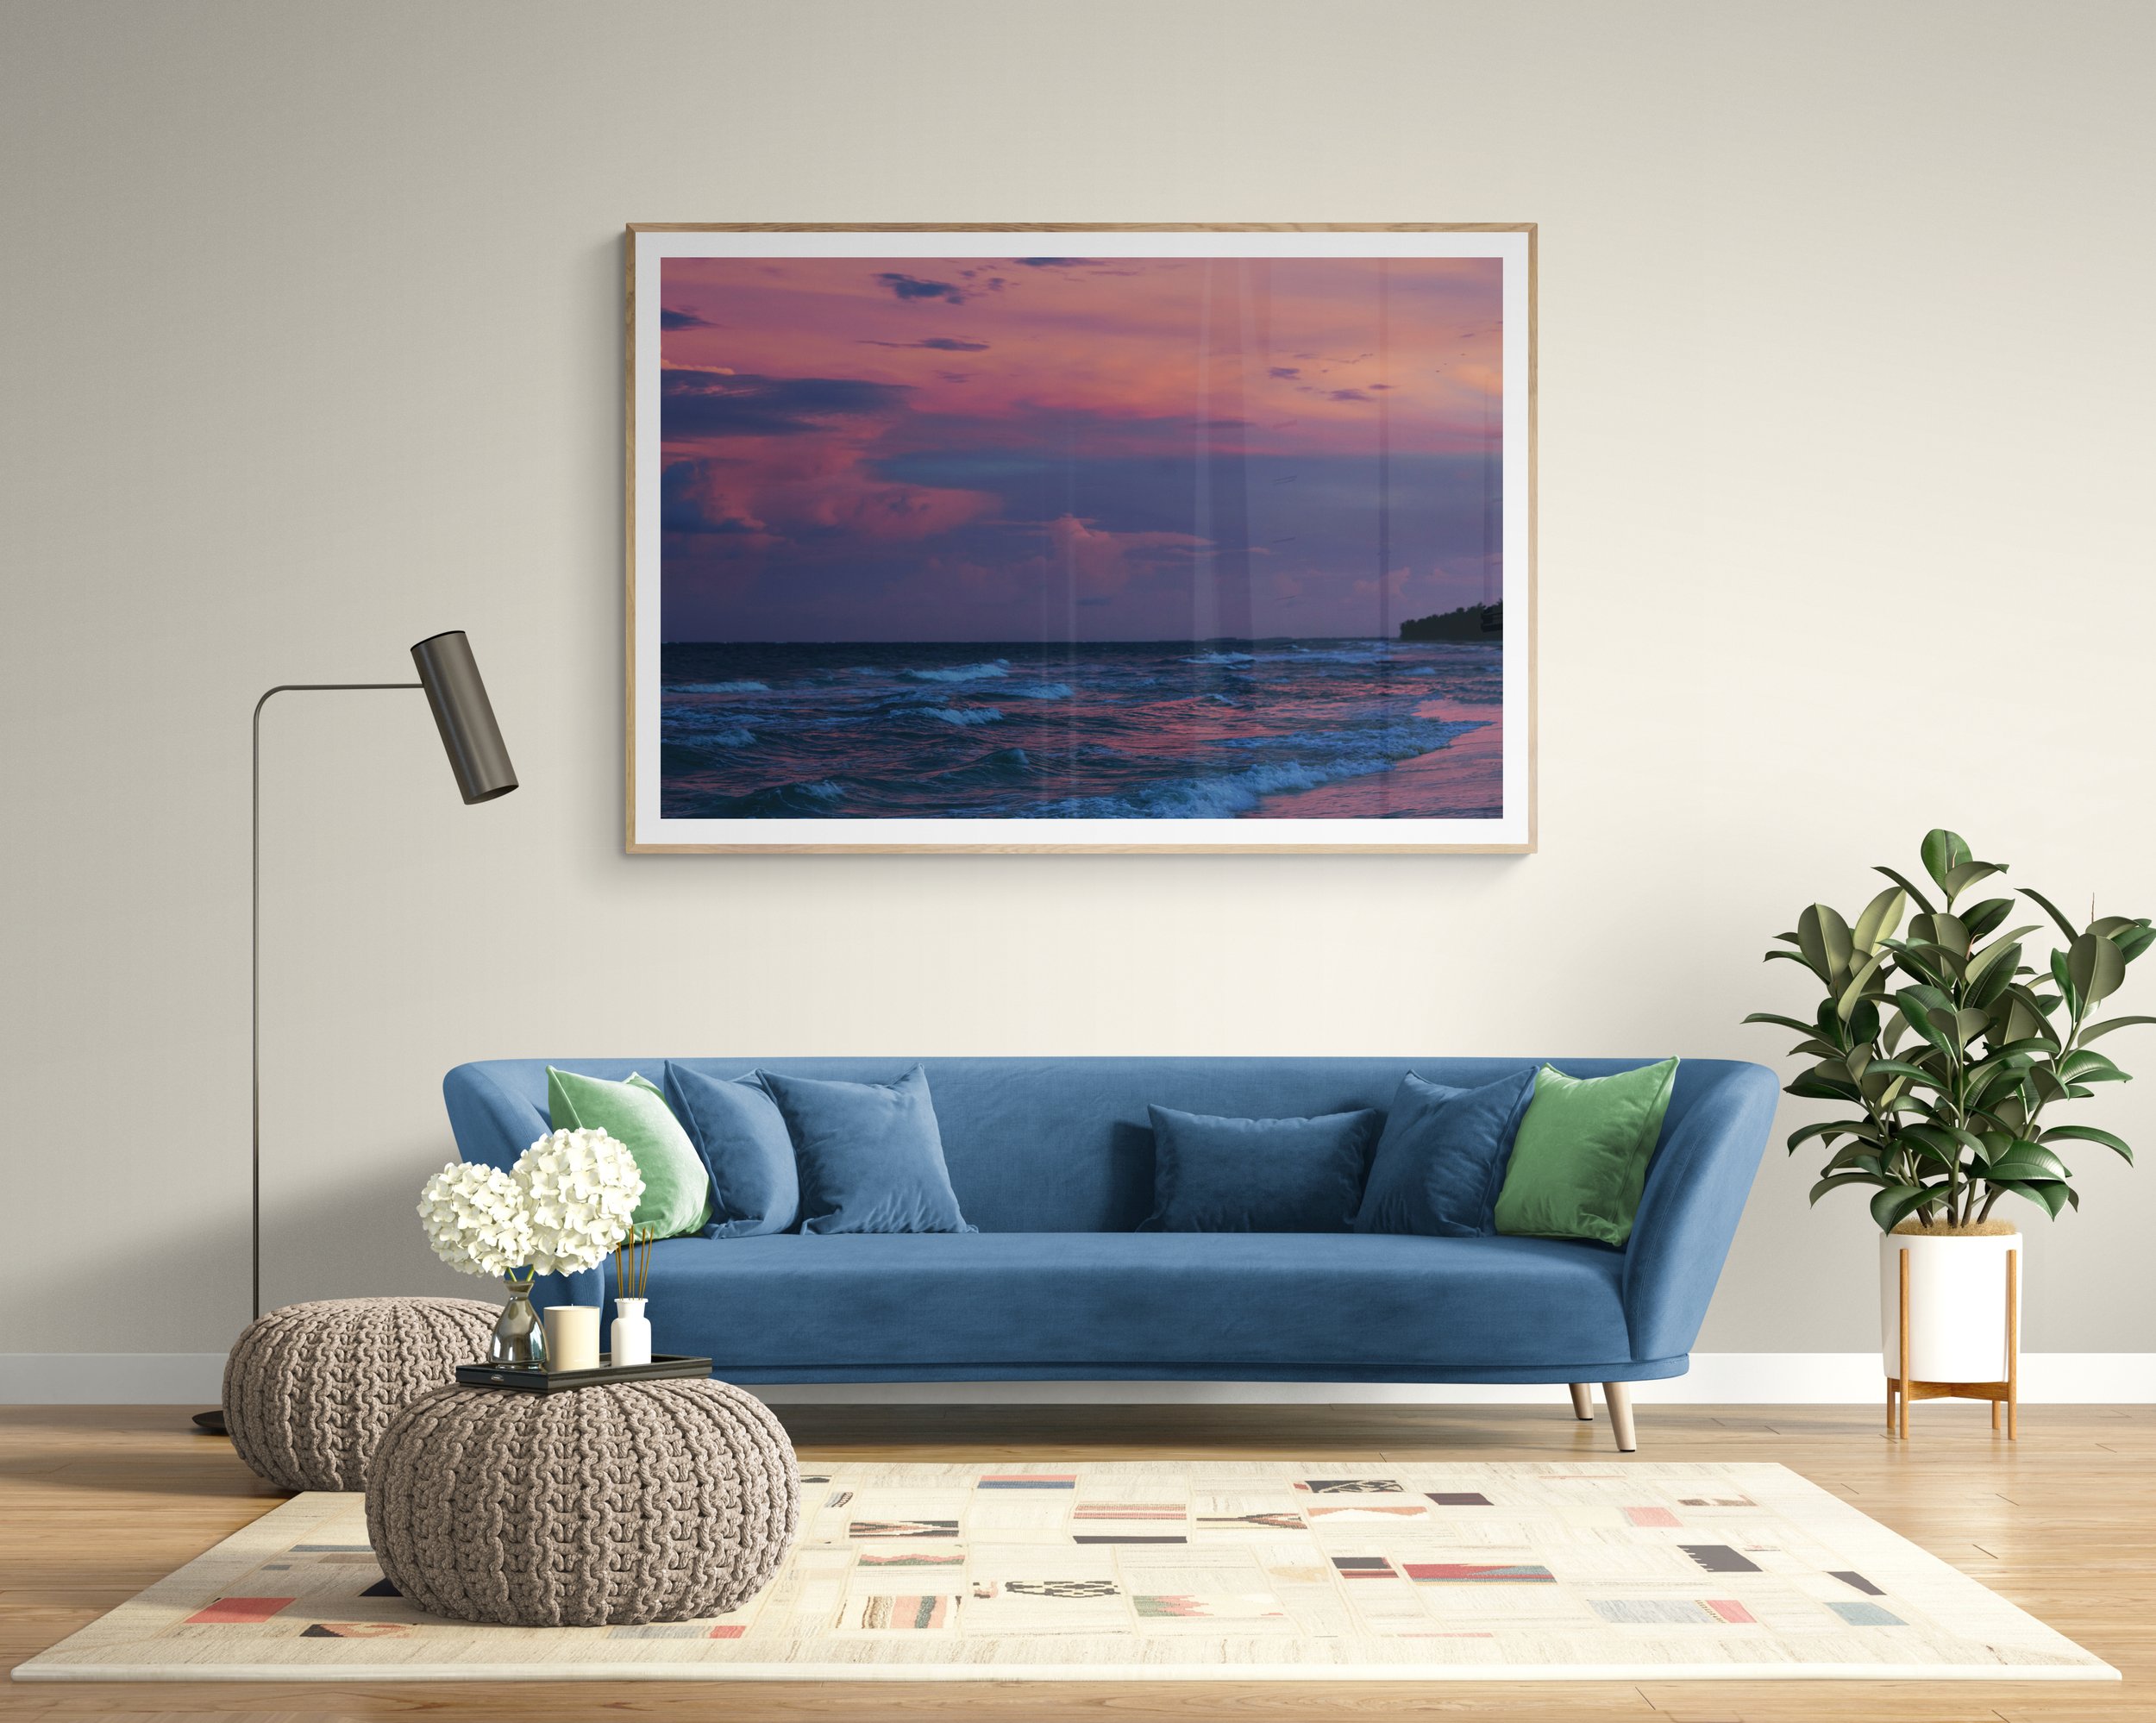 Modern_chic_living_room_interior_with_long_sofa-2.jpg